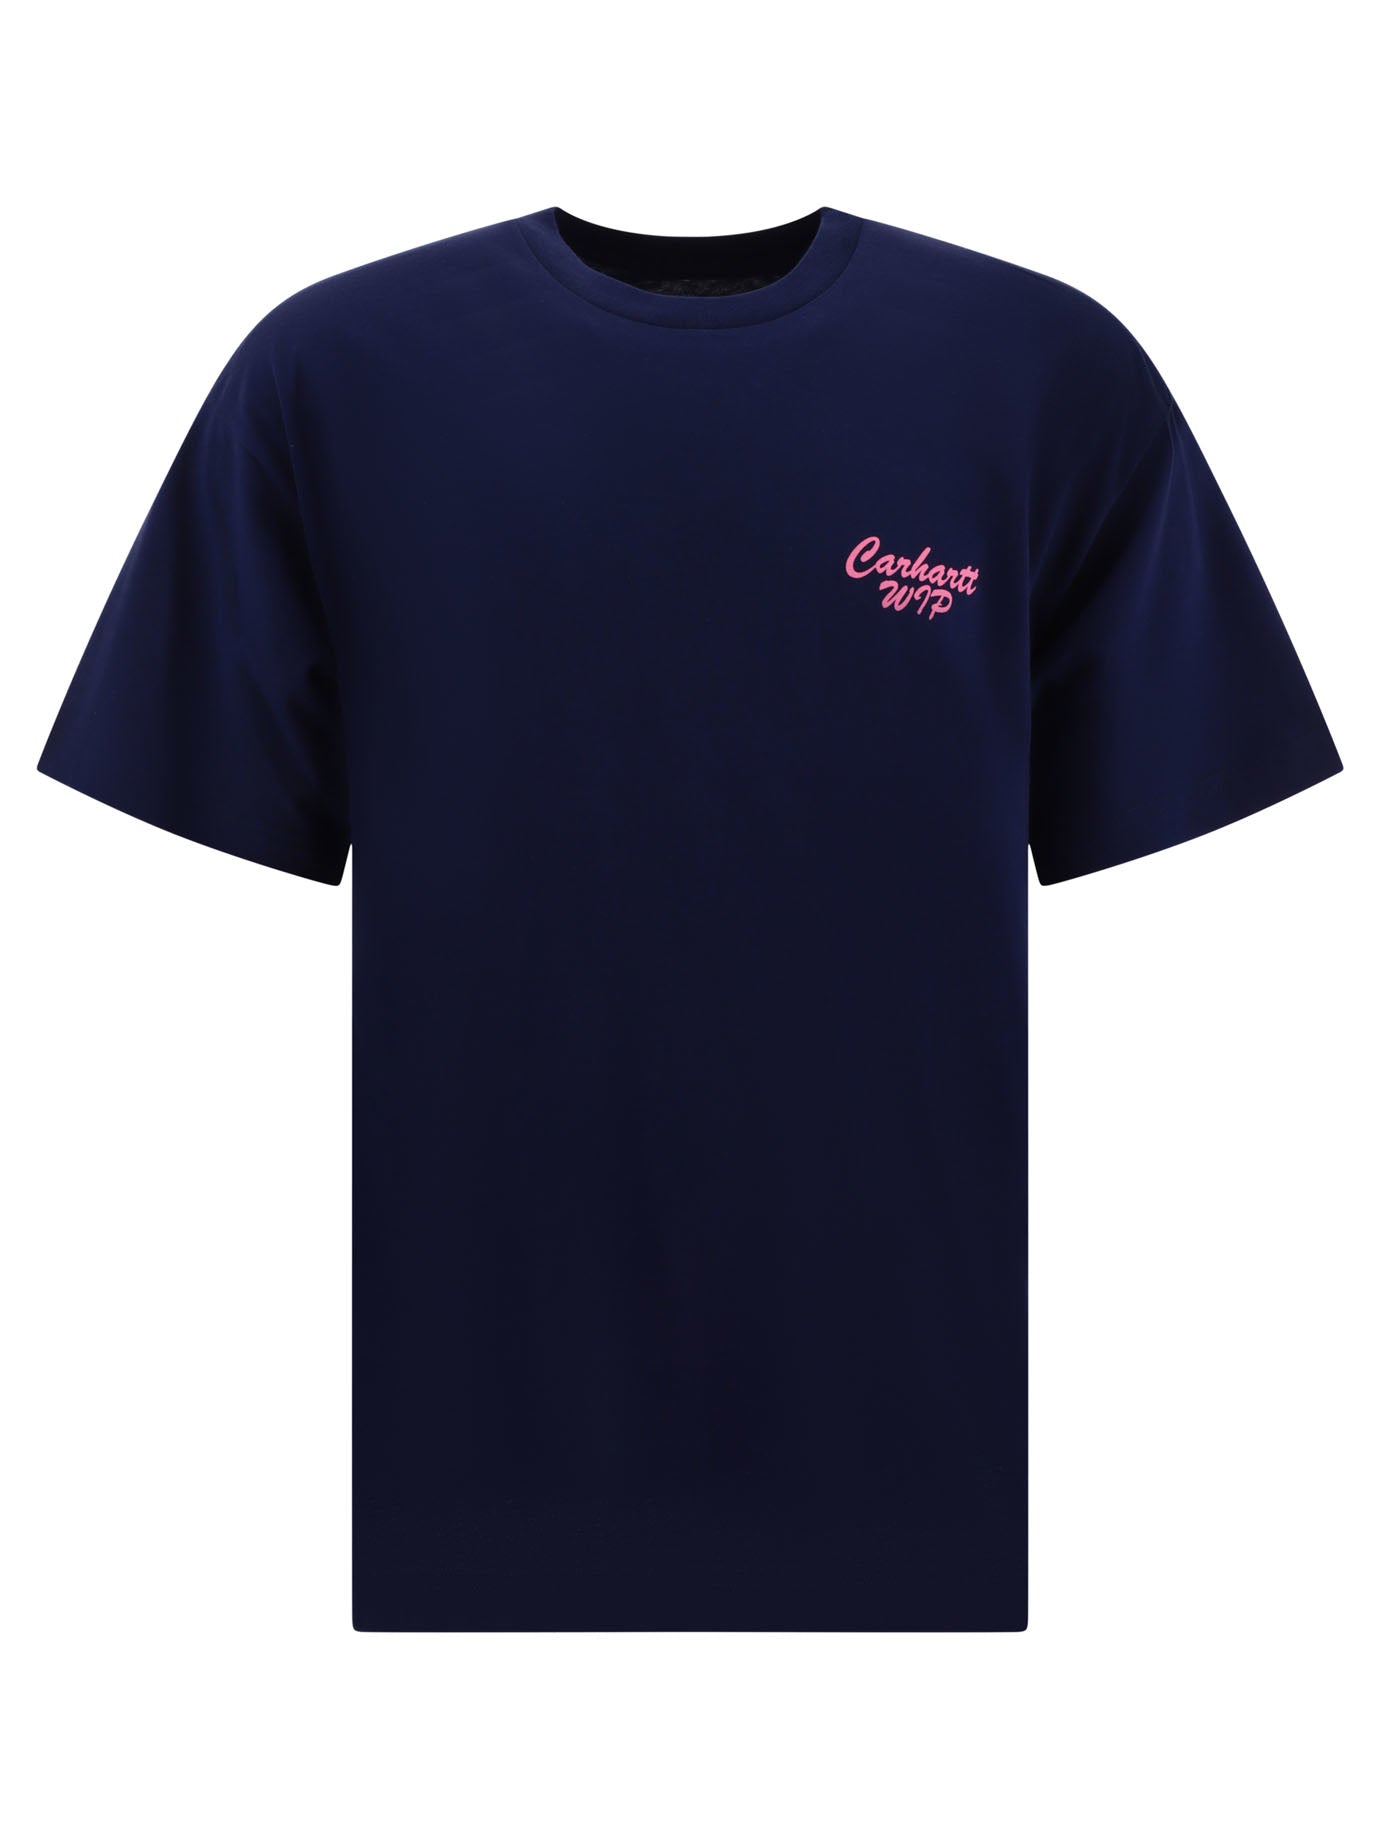 Carhartt Wip "friendship" T Shirt In Blue